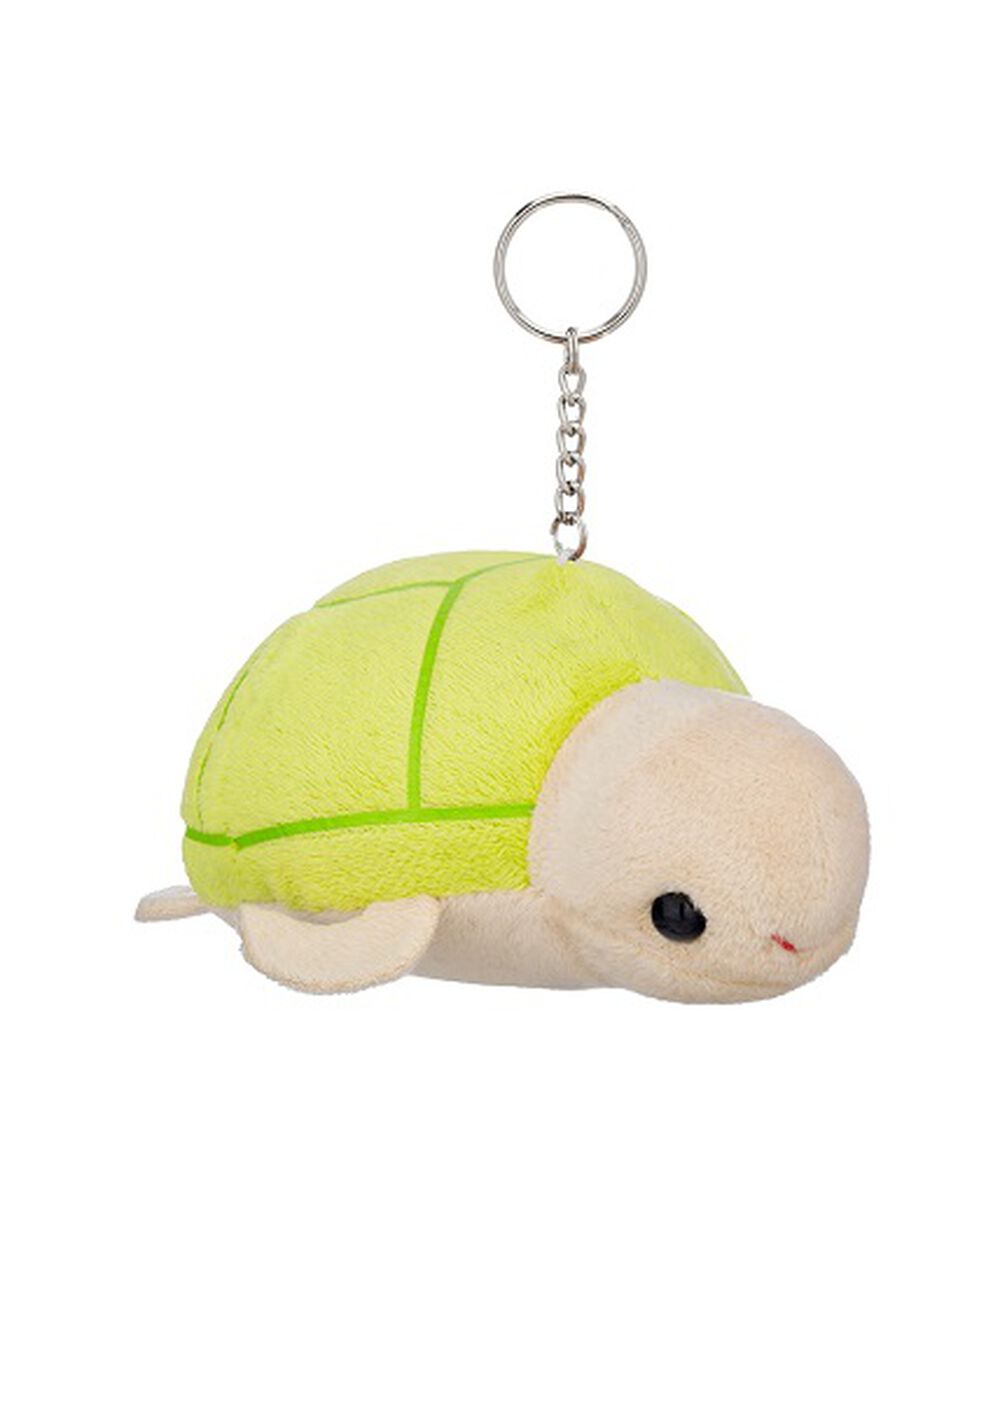 Turtle Plush Keychain, Green, 4 Inches, Amuse